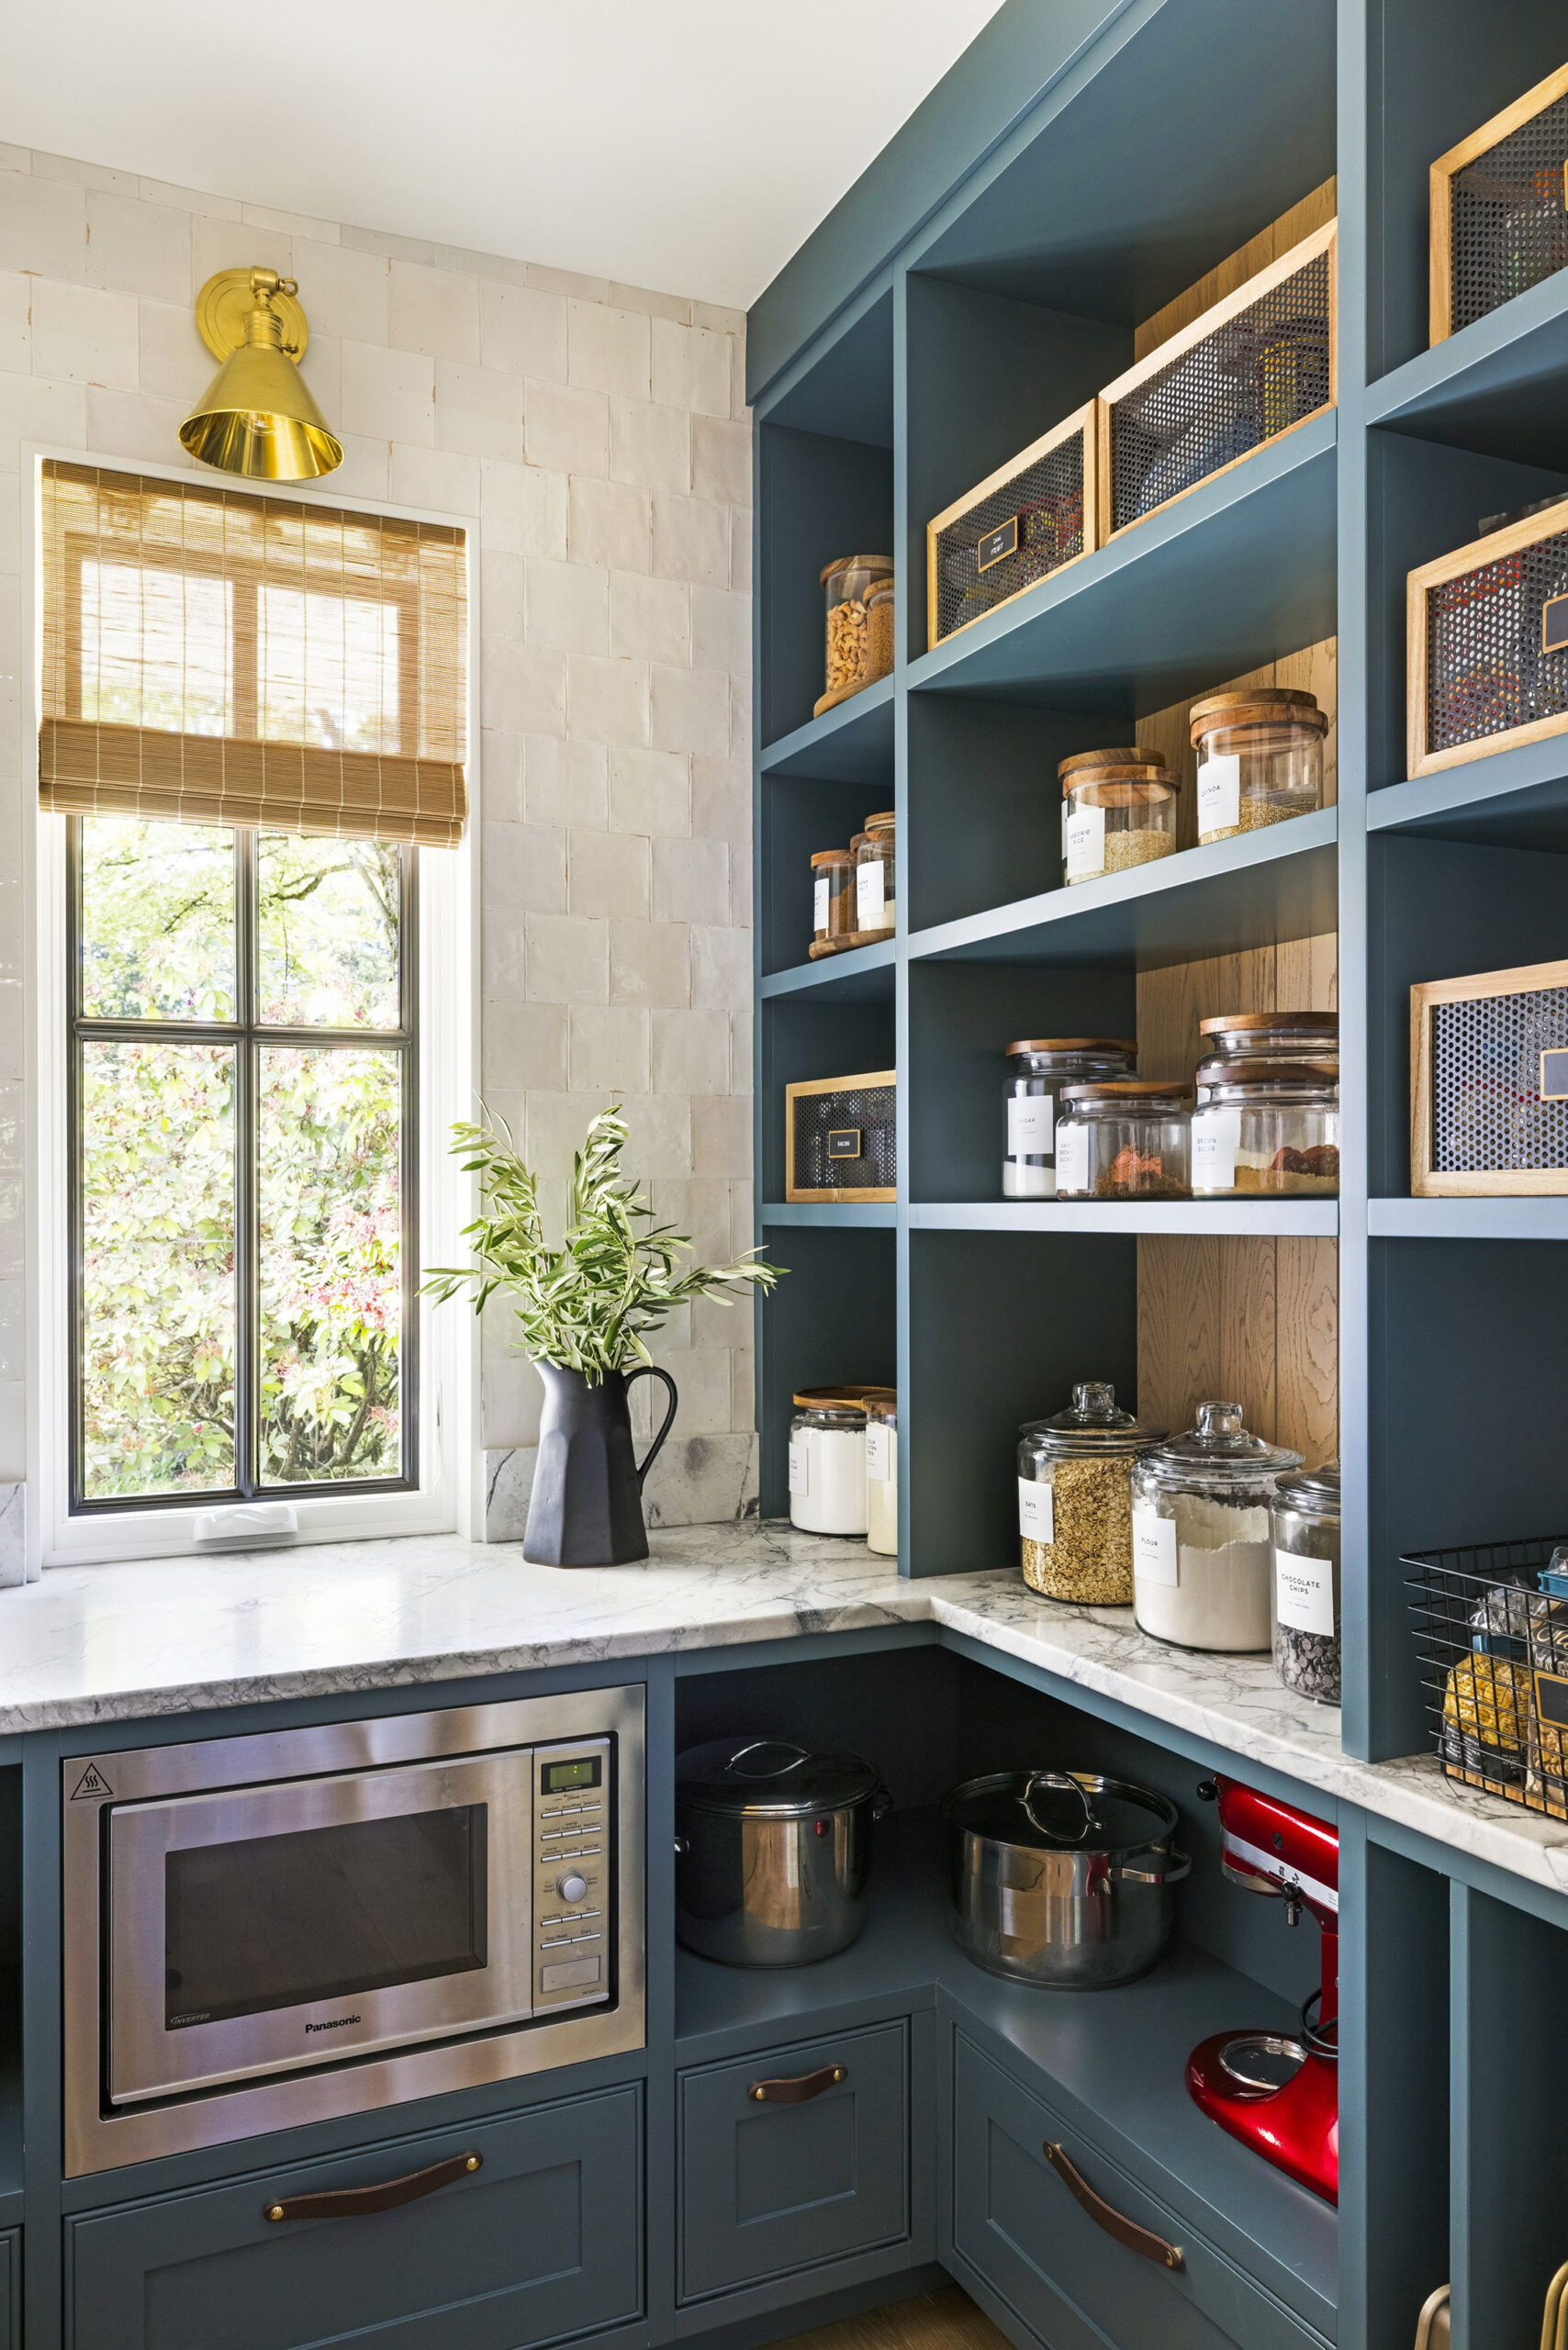 70 Best Small Kitchen Design Ideas - Small Kitchen Layout Photos in Small Kitchen Design